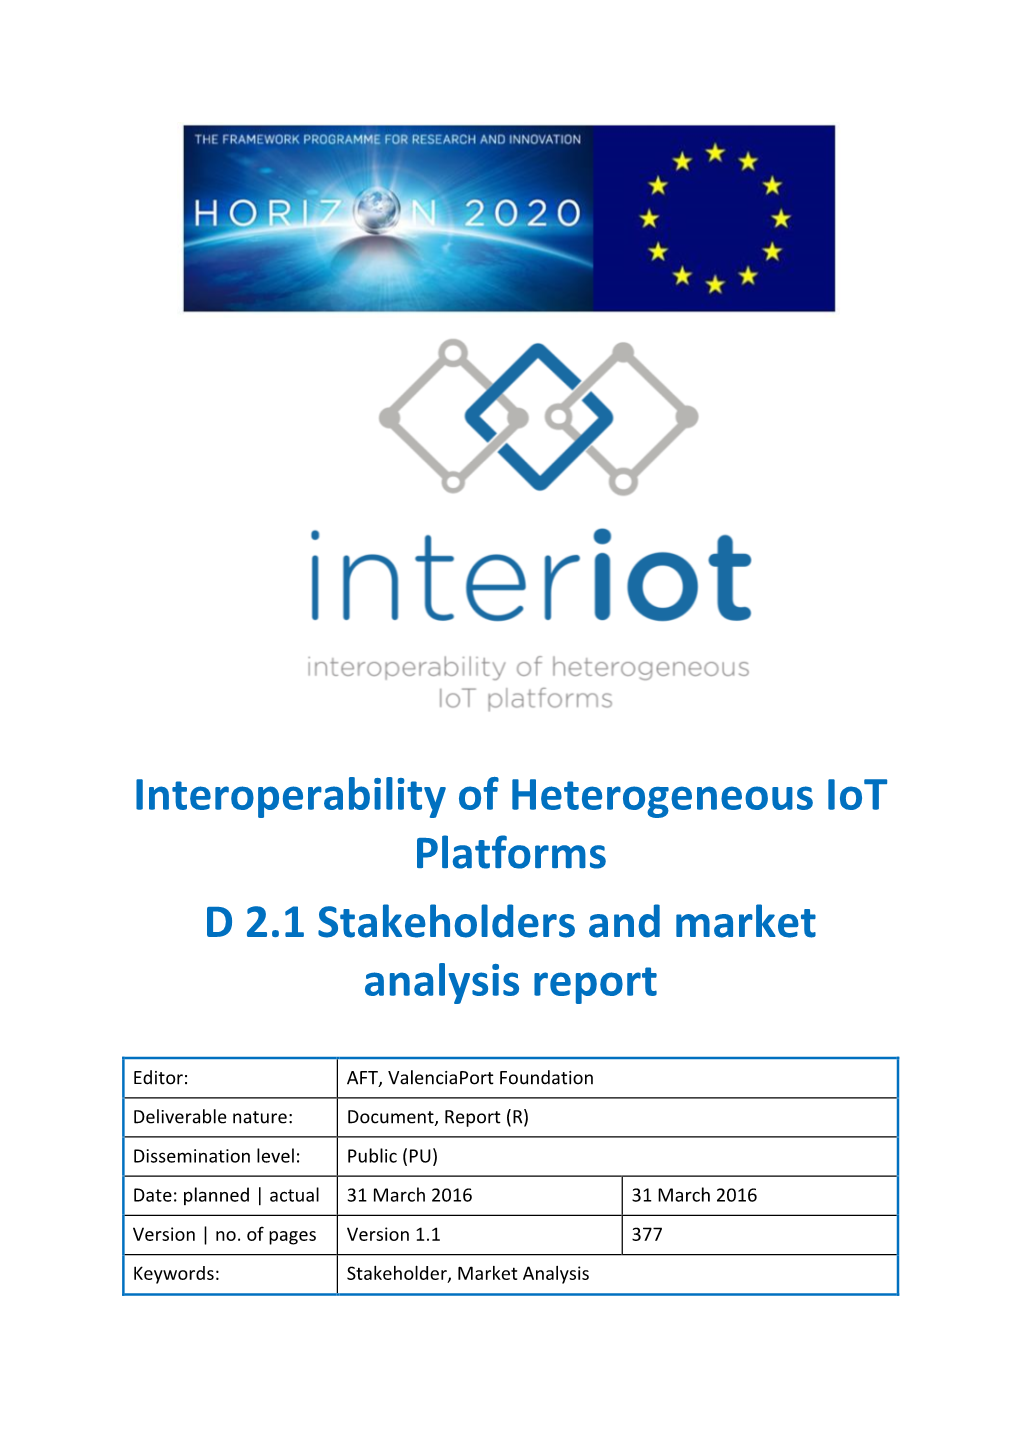 Interoperability of Heterogeneous Iot Platforms D 2.1 Stakeholders and Market Analysis Report